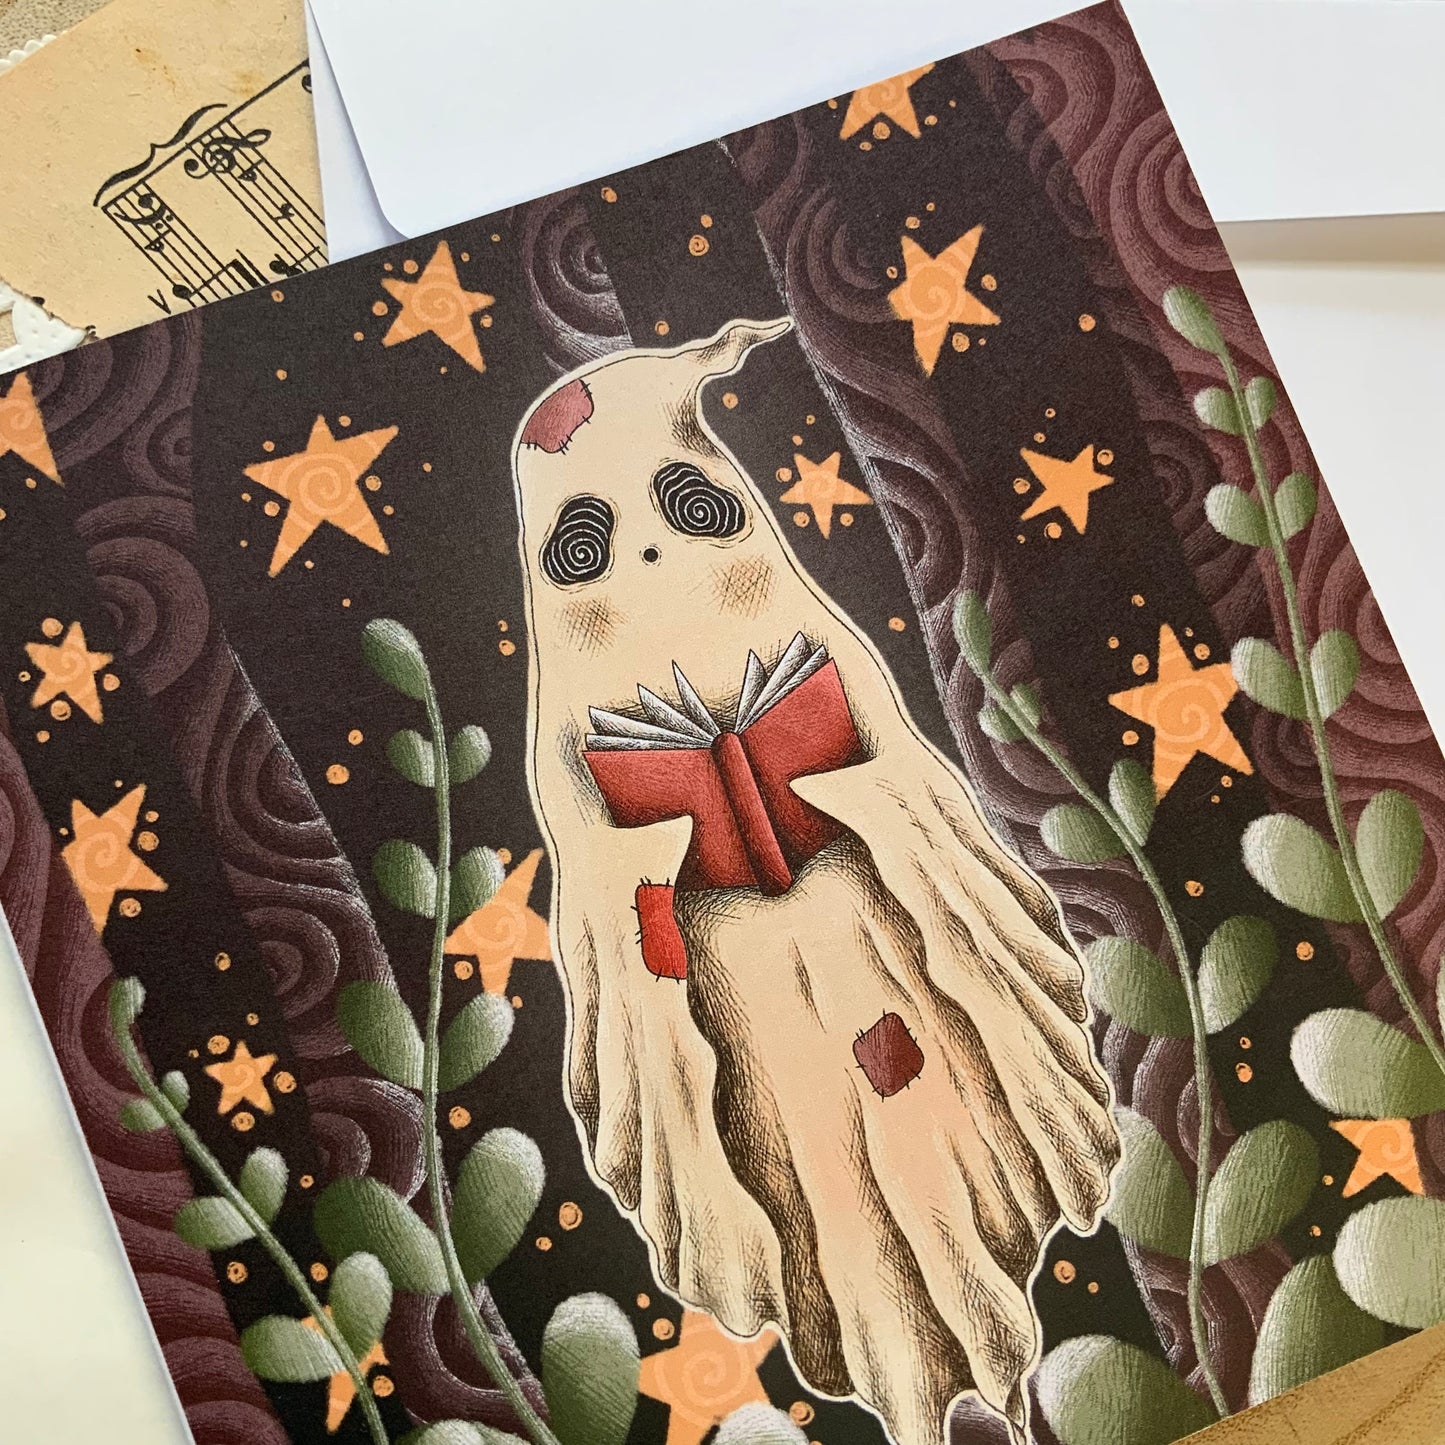 Magical storybook ghost greetings card